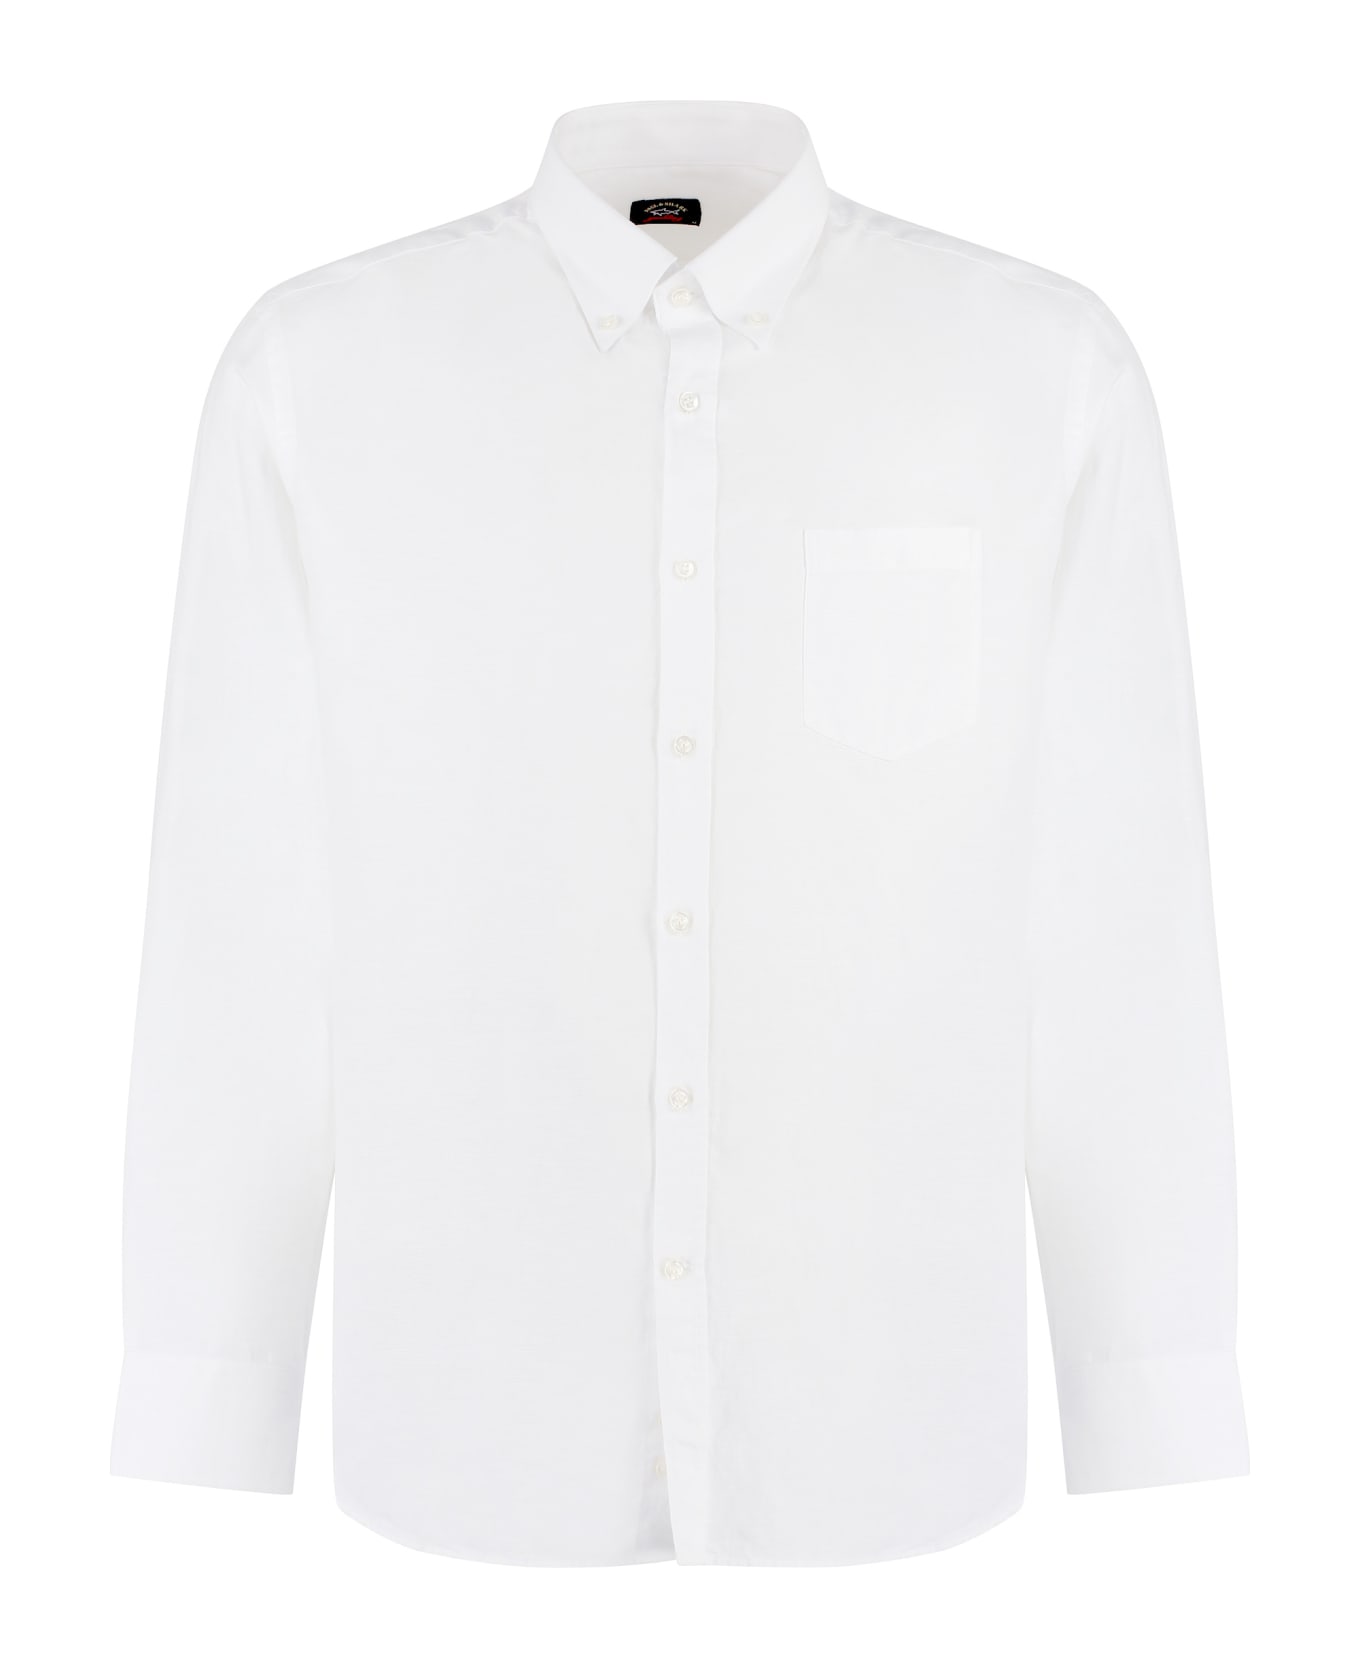 Paul&Shark Long Sleeve Cotton Blend Shirt - White シャツ